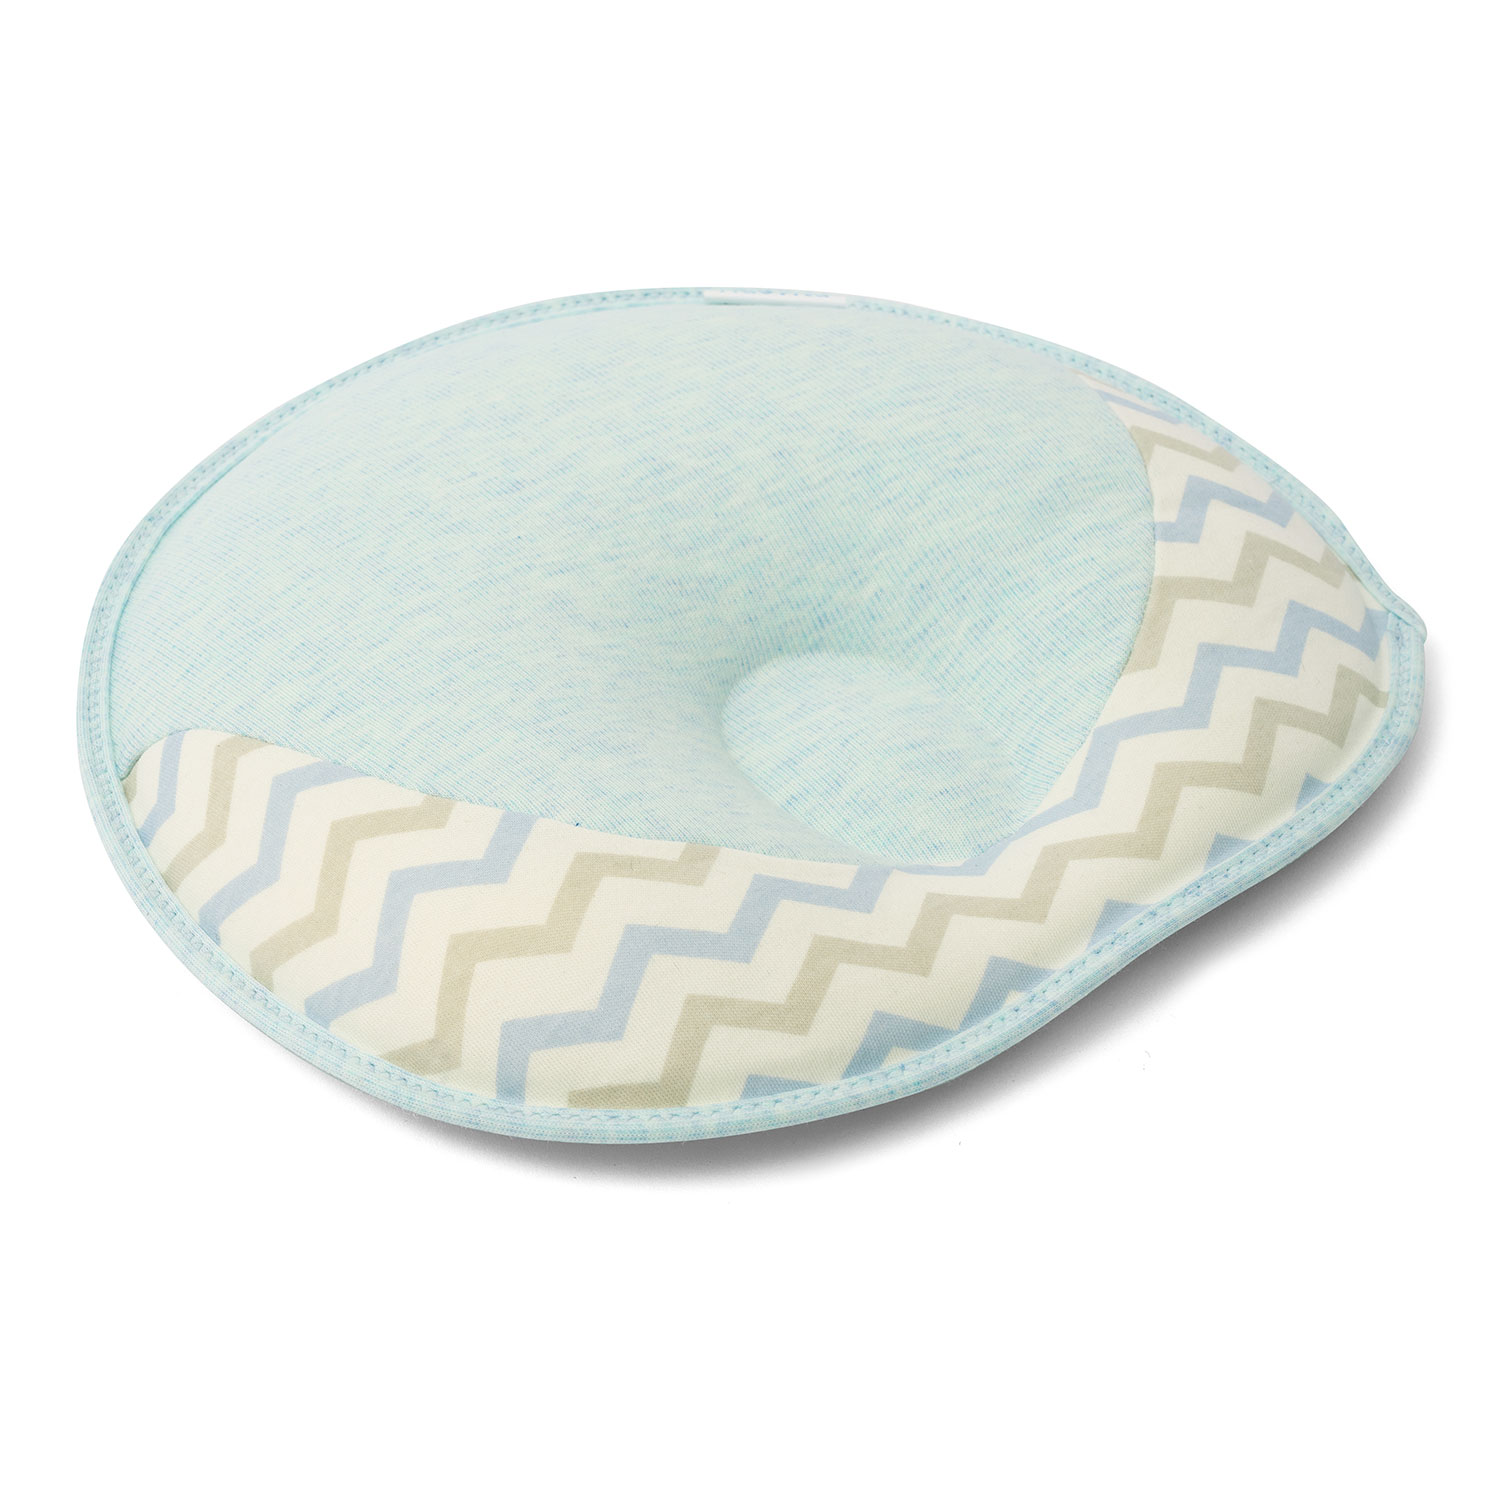 Подушка для новорожденного Nuovita NEONUTTI Sonno Dipinto  02 подушка для новорожденного nuovita neonutti mela memoria blu голубой